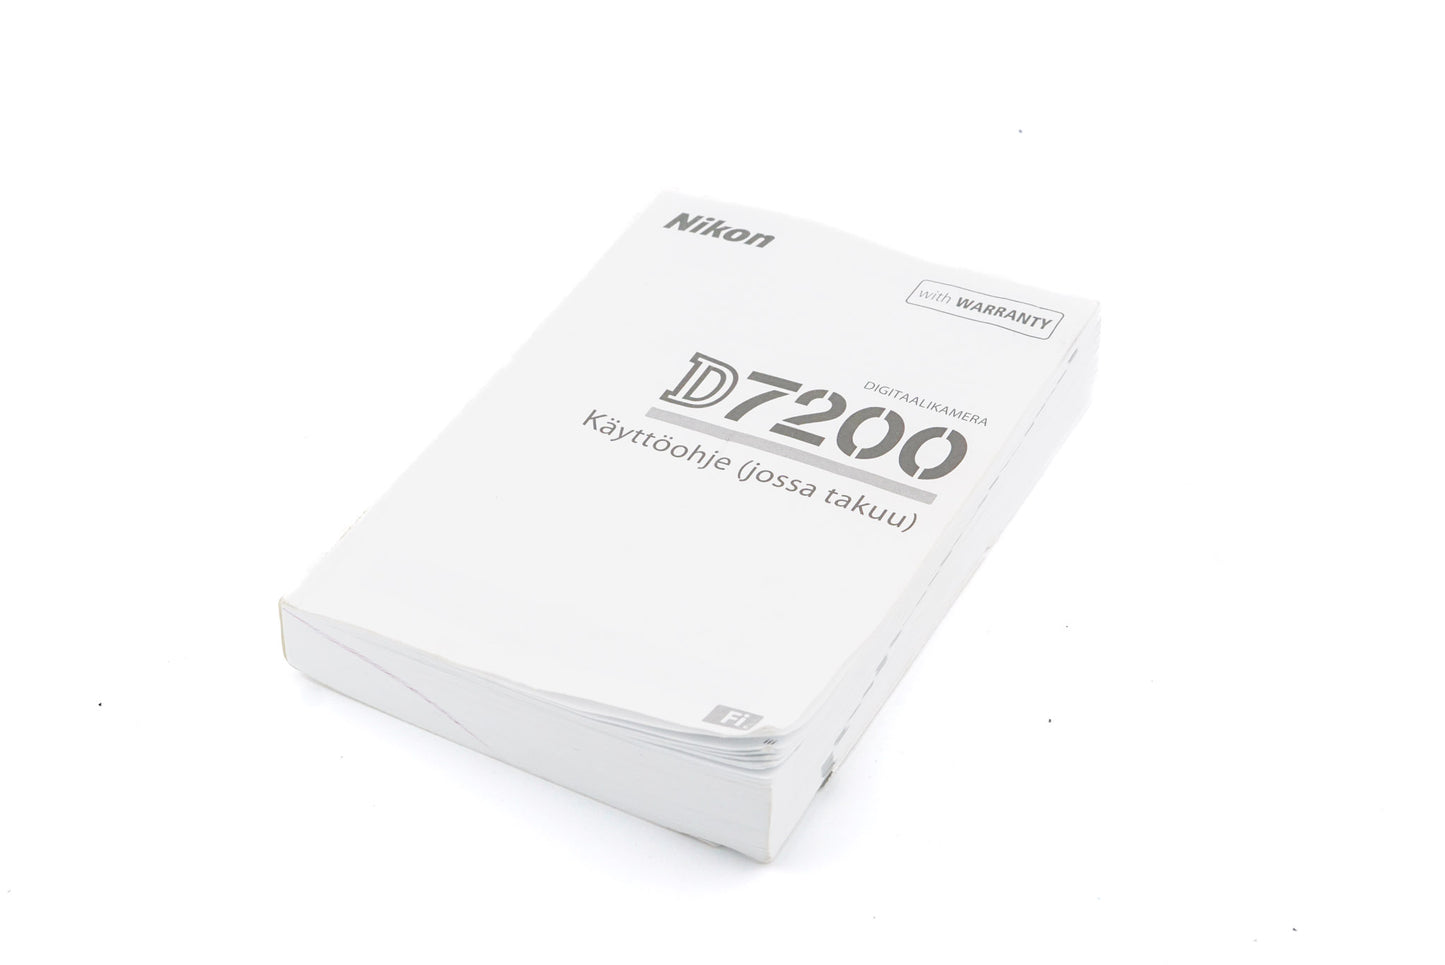 Nikon D7200 Instructions - Accessory